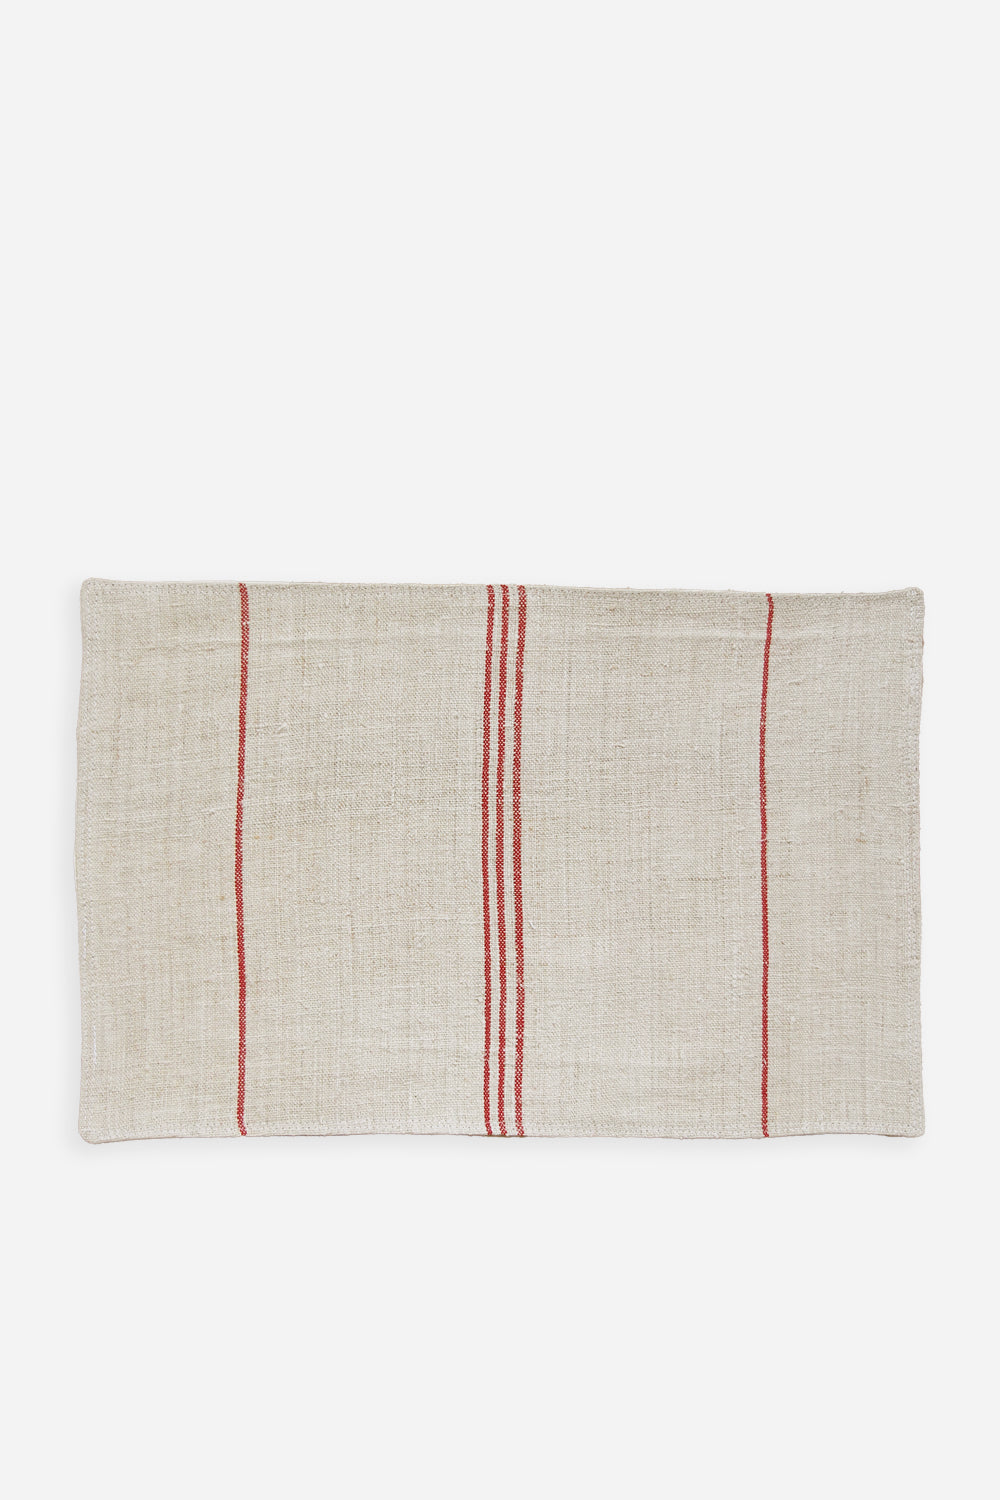 Vintage Grain Sack Placemat / Red Stripe